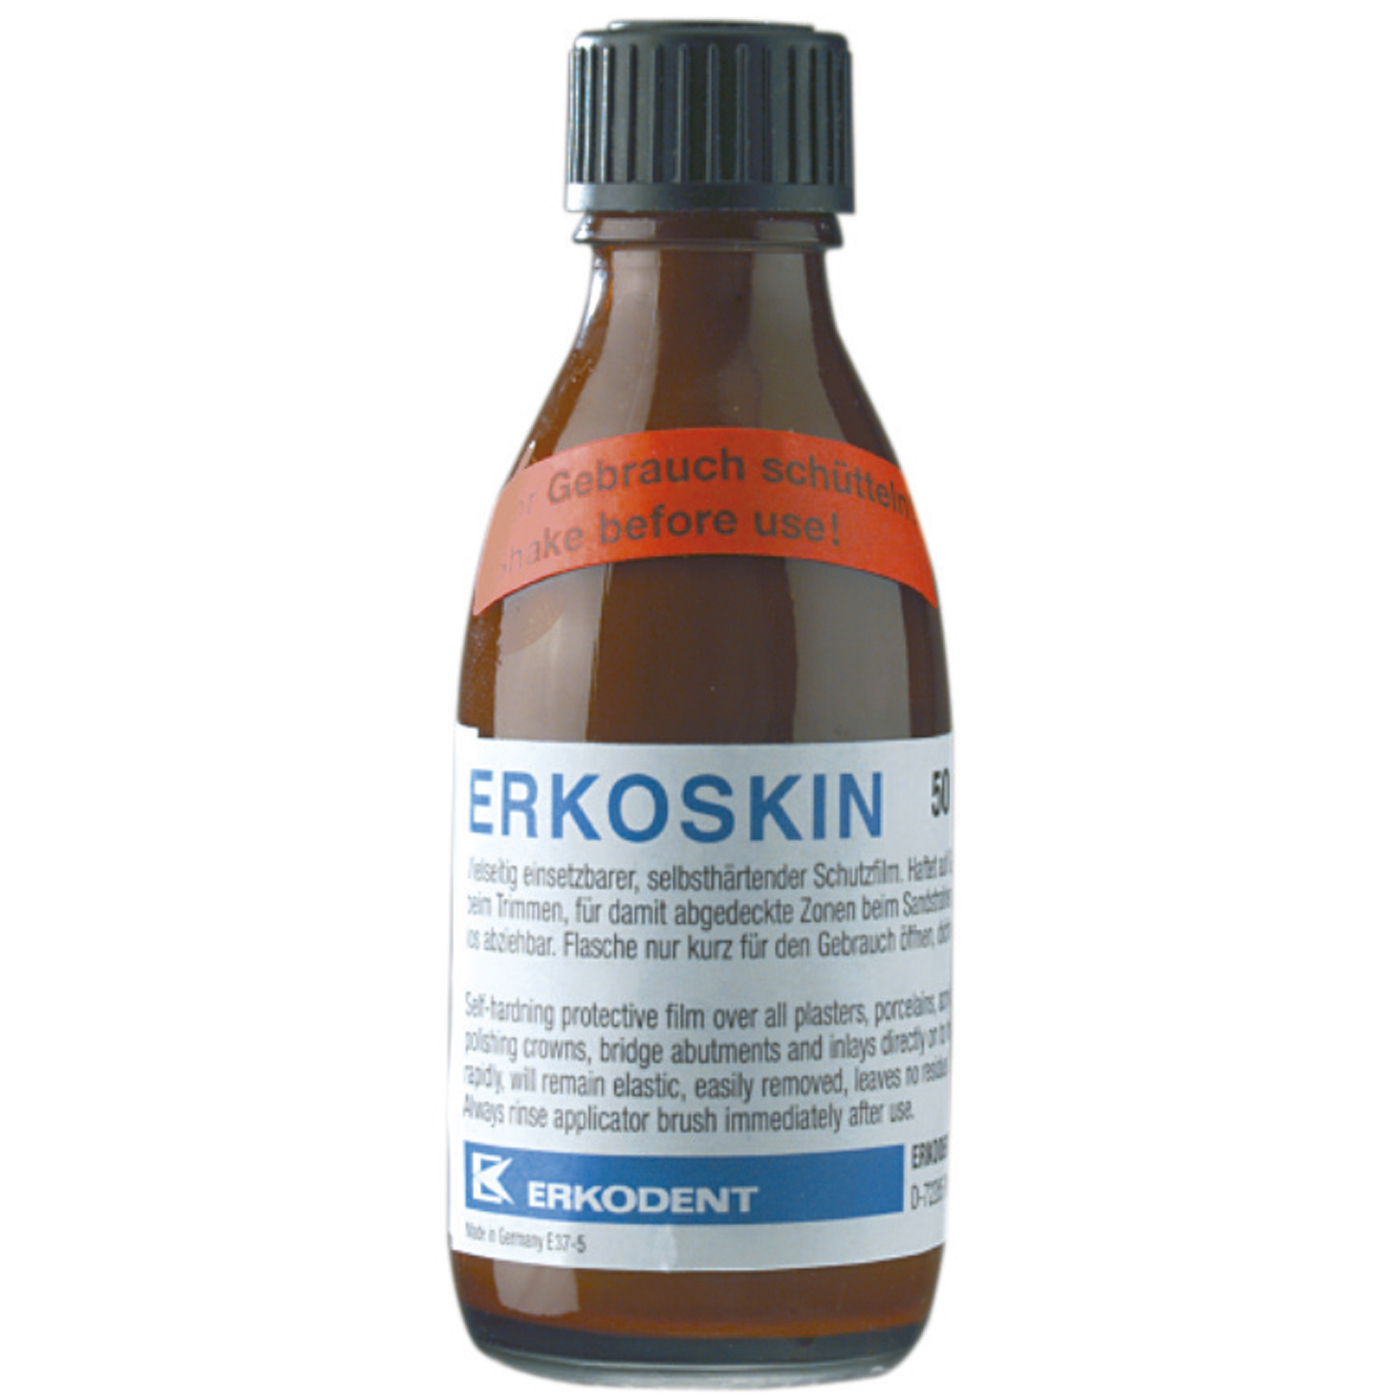 Erkoskin Protective Film - 50 ml